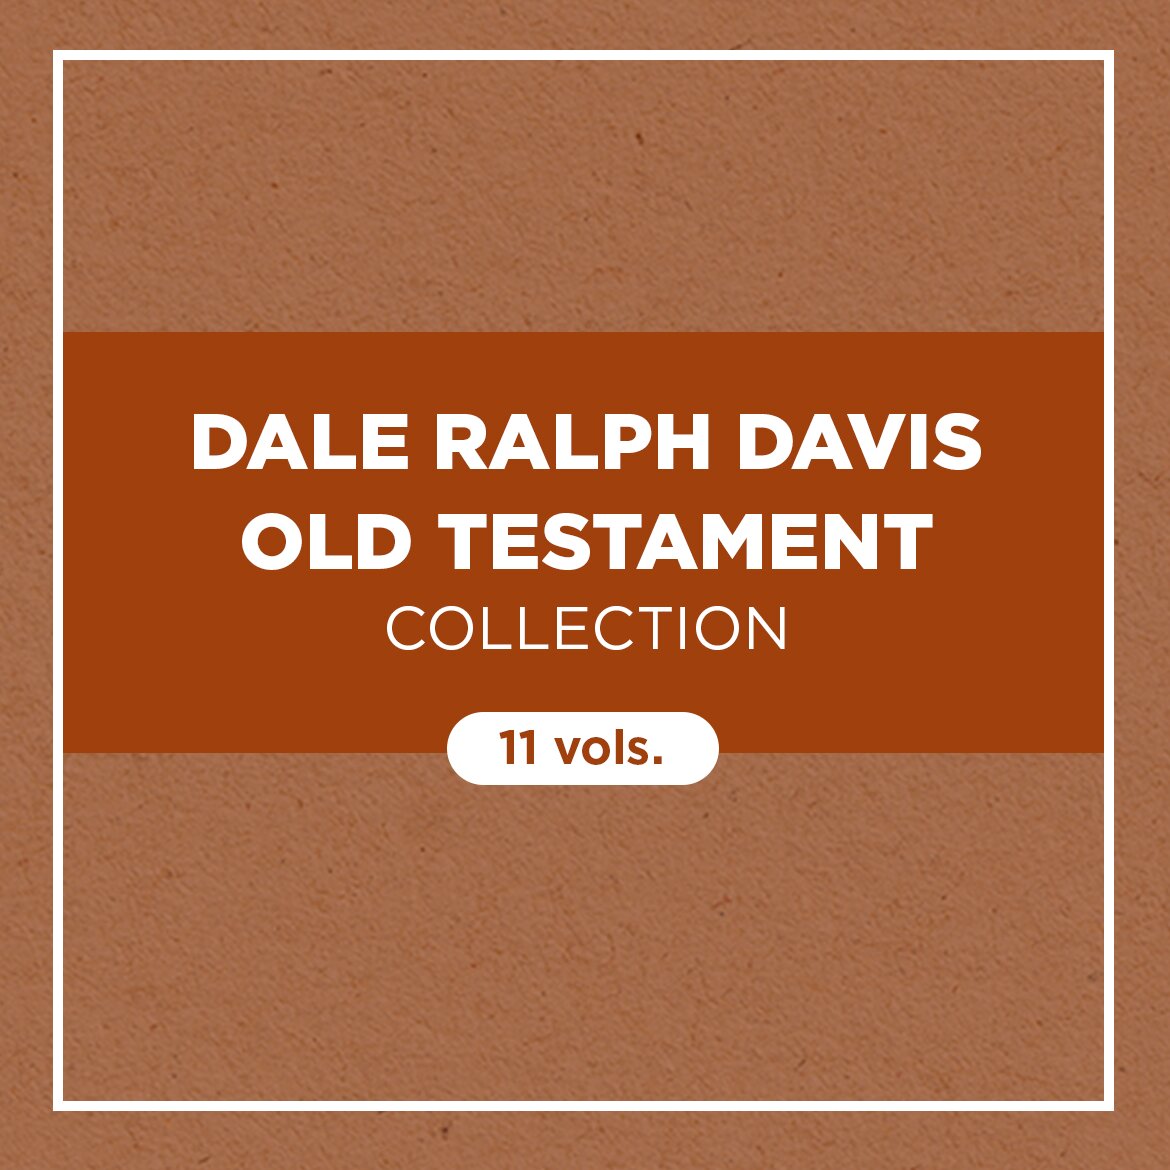 Dale Ralph Davis Old Testament Collection (11 vols.)